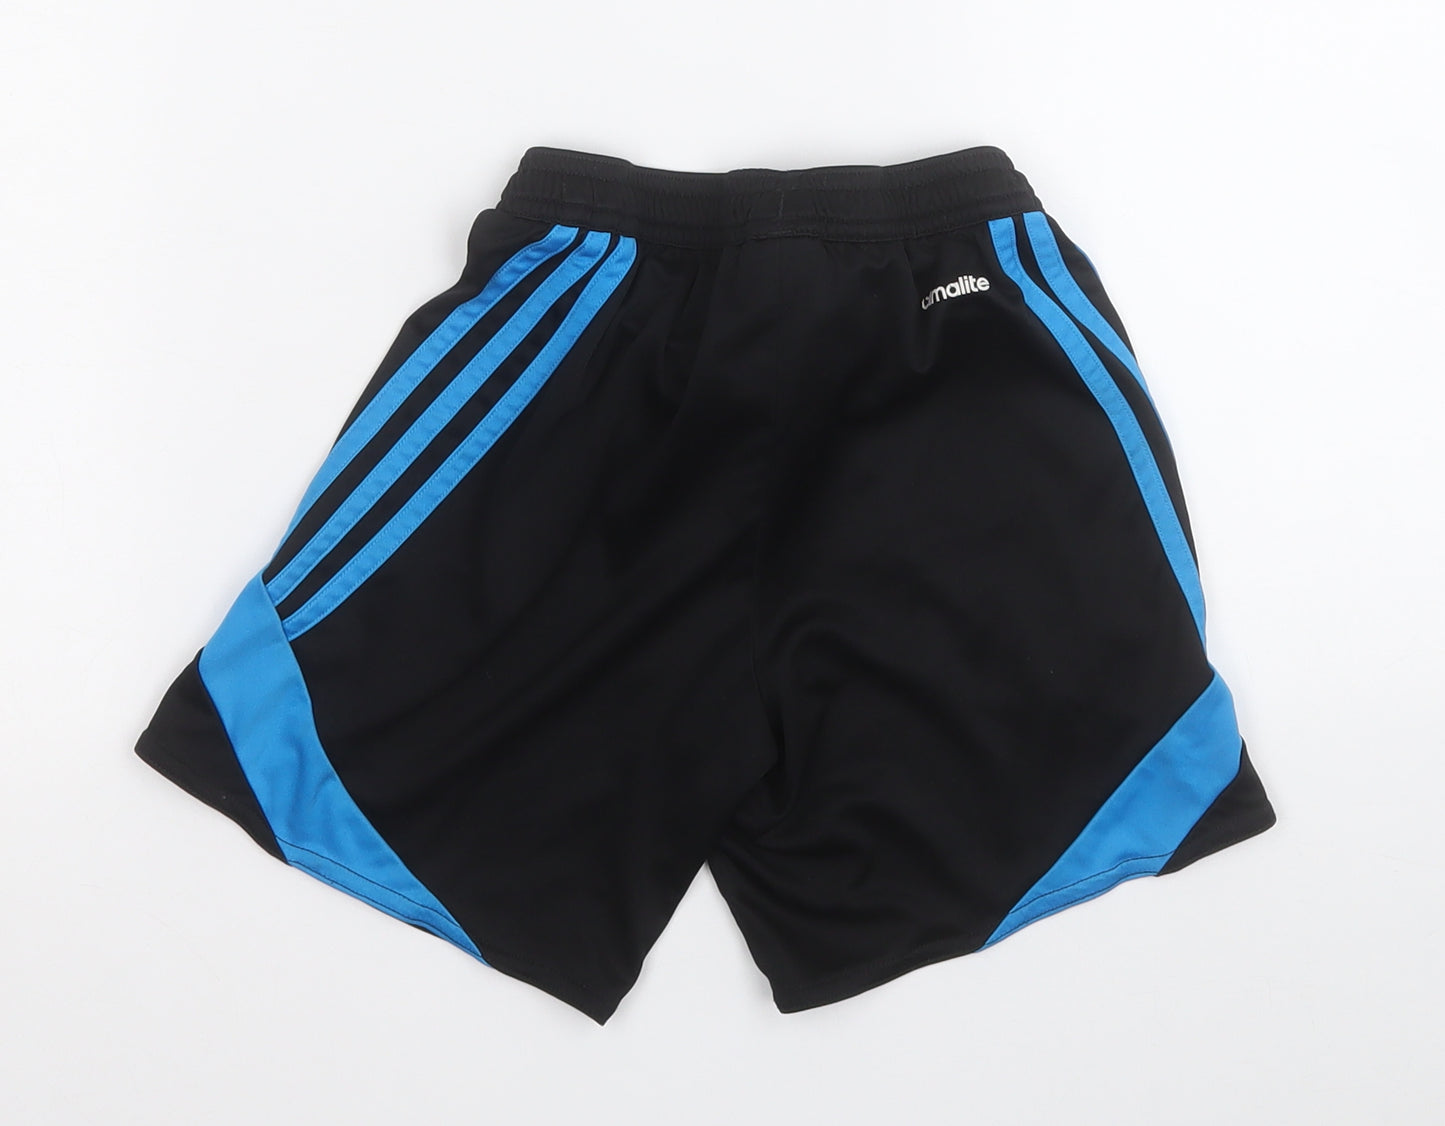 adidas Boys Black  Polyester Sweat Shorts Size S  Regular